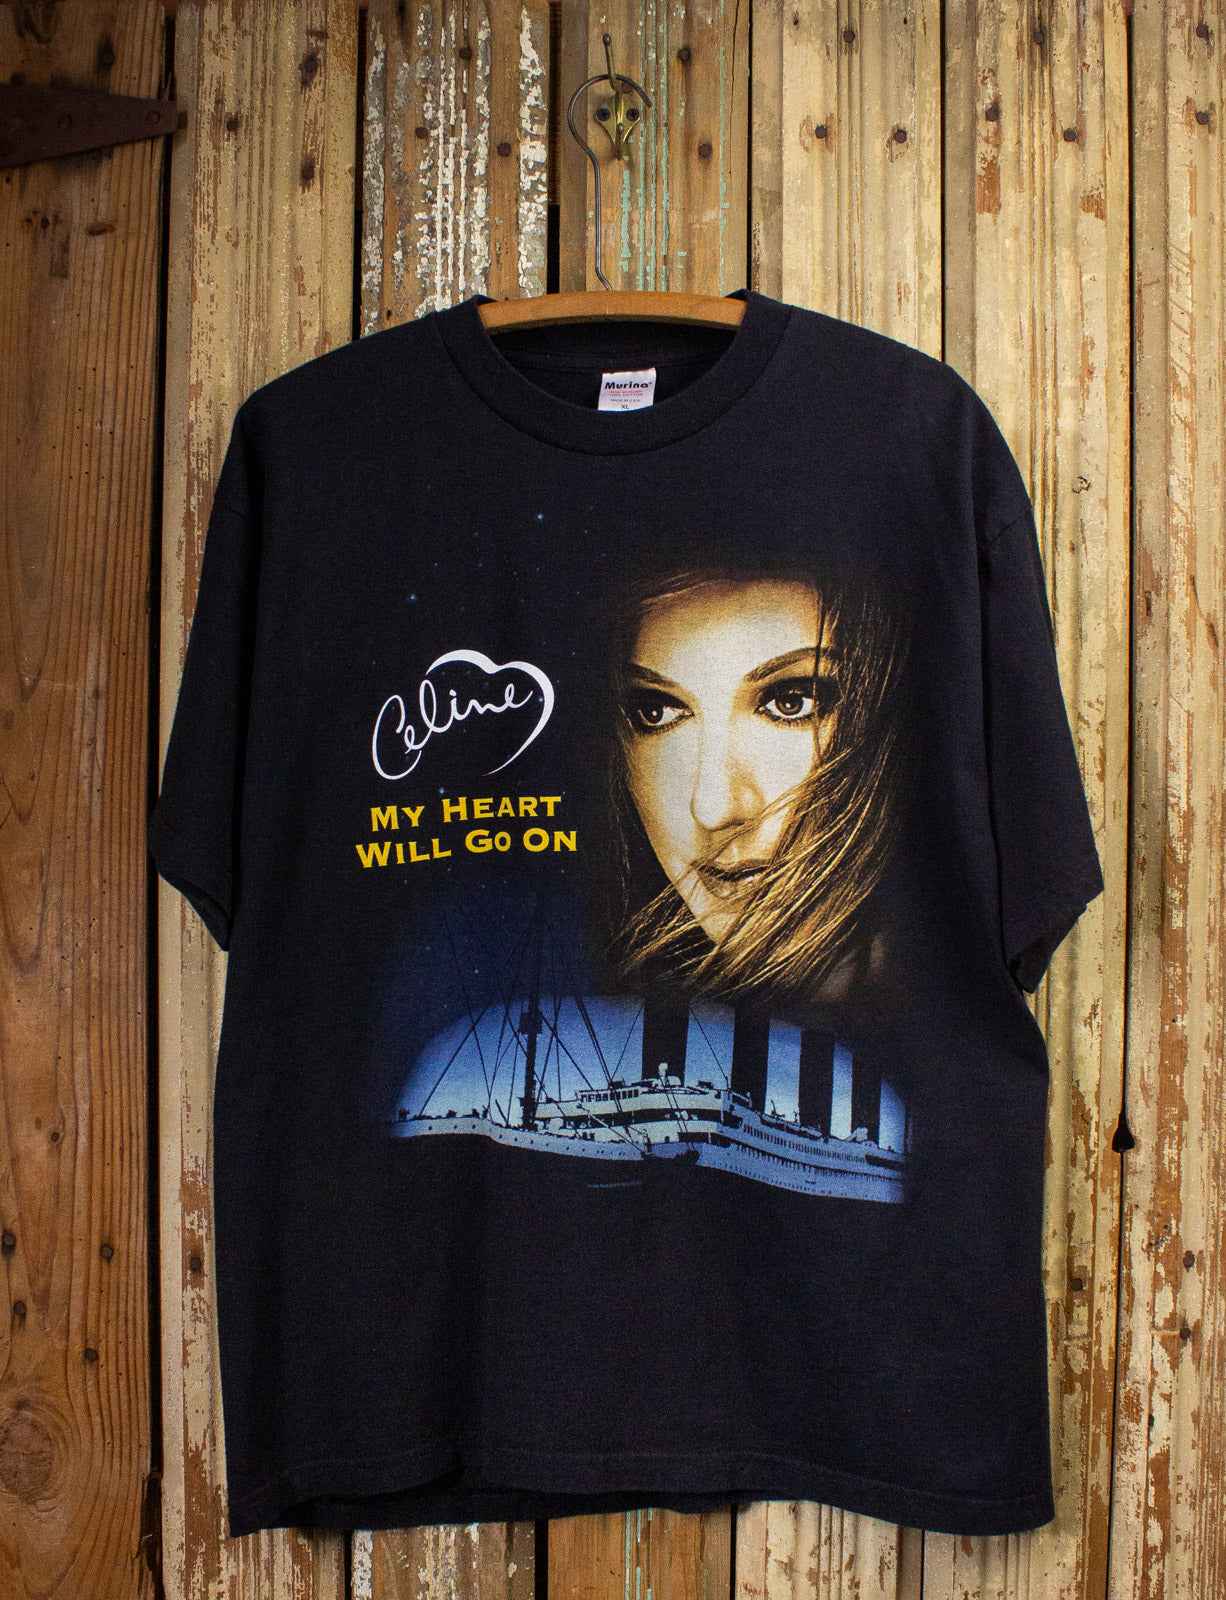 Vintage Celine Dion Let's Talk About Love Concert T Shirt 1999 Black XL